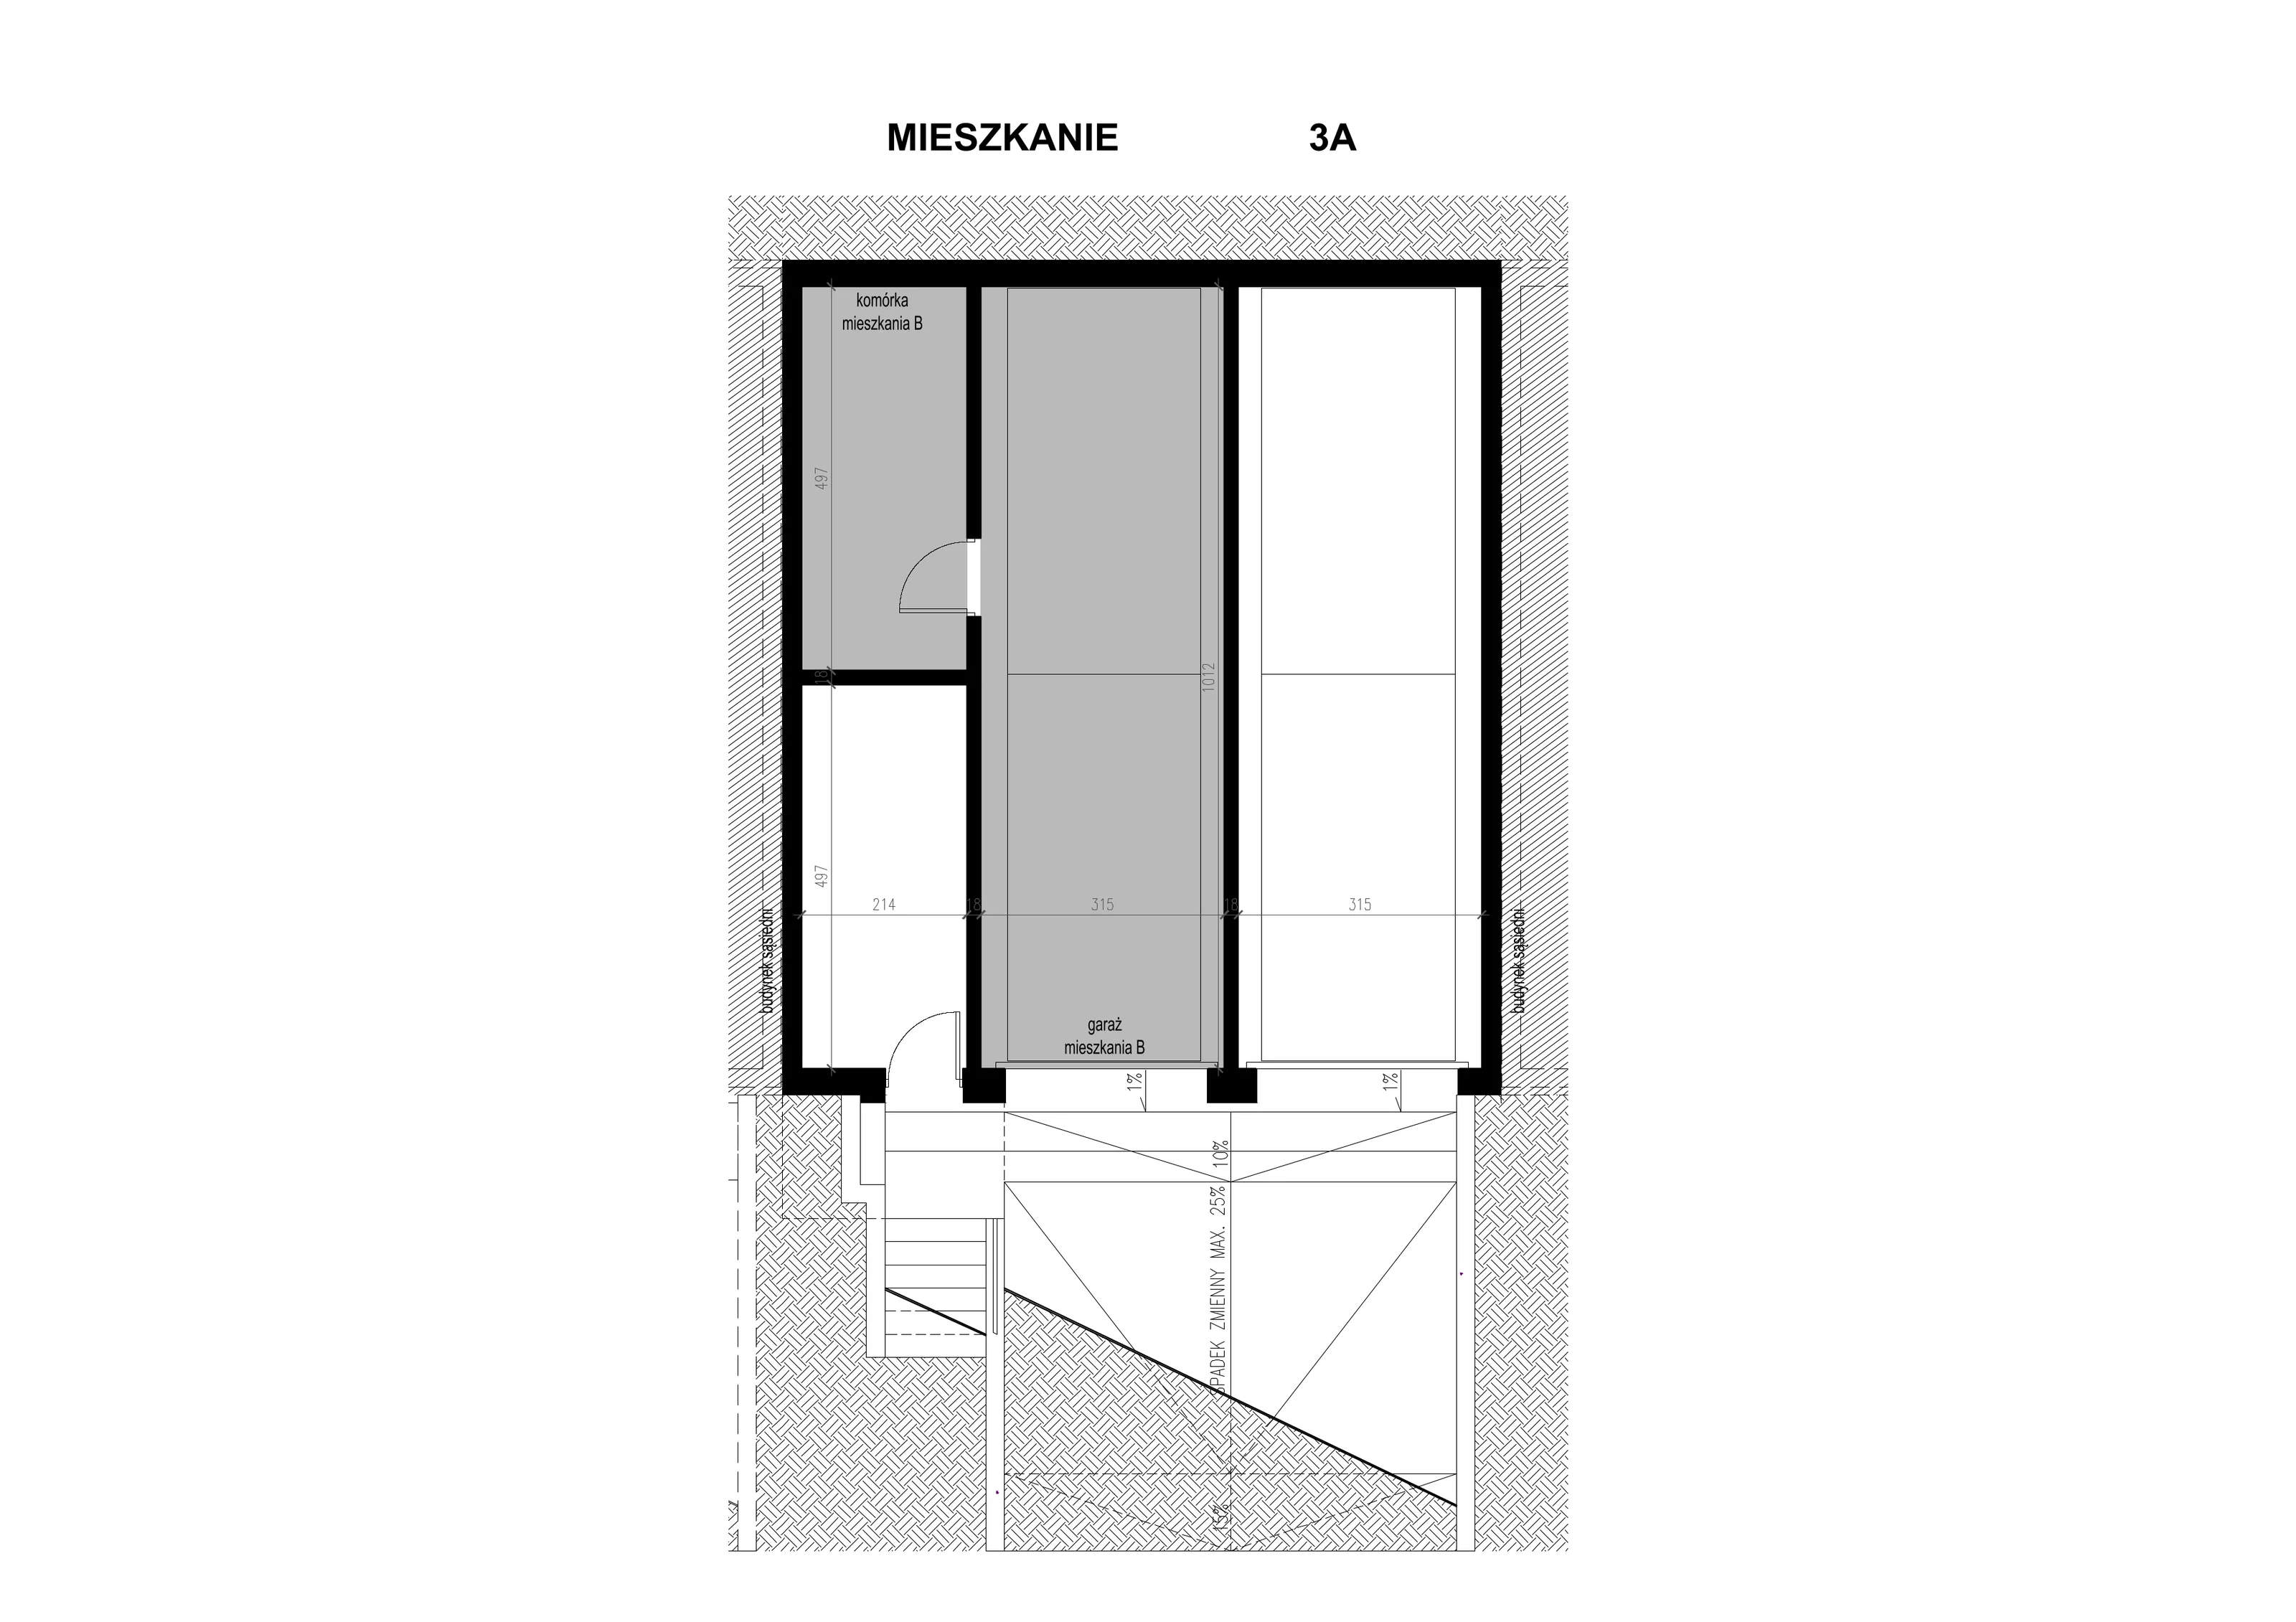 Apartament 80,15 m², parter, oferta nr 1.3A, Osiedle BO, Wrocław, Kowale, ul. Bociana